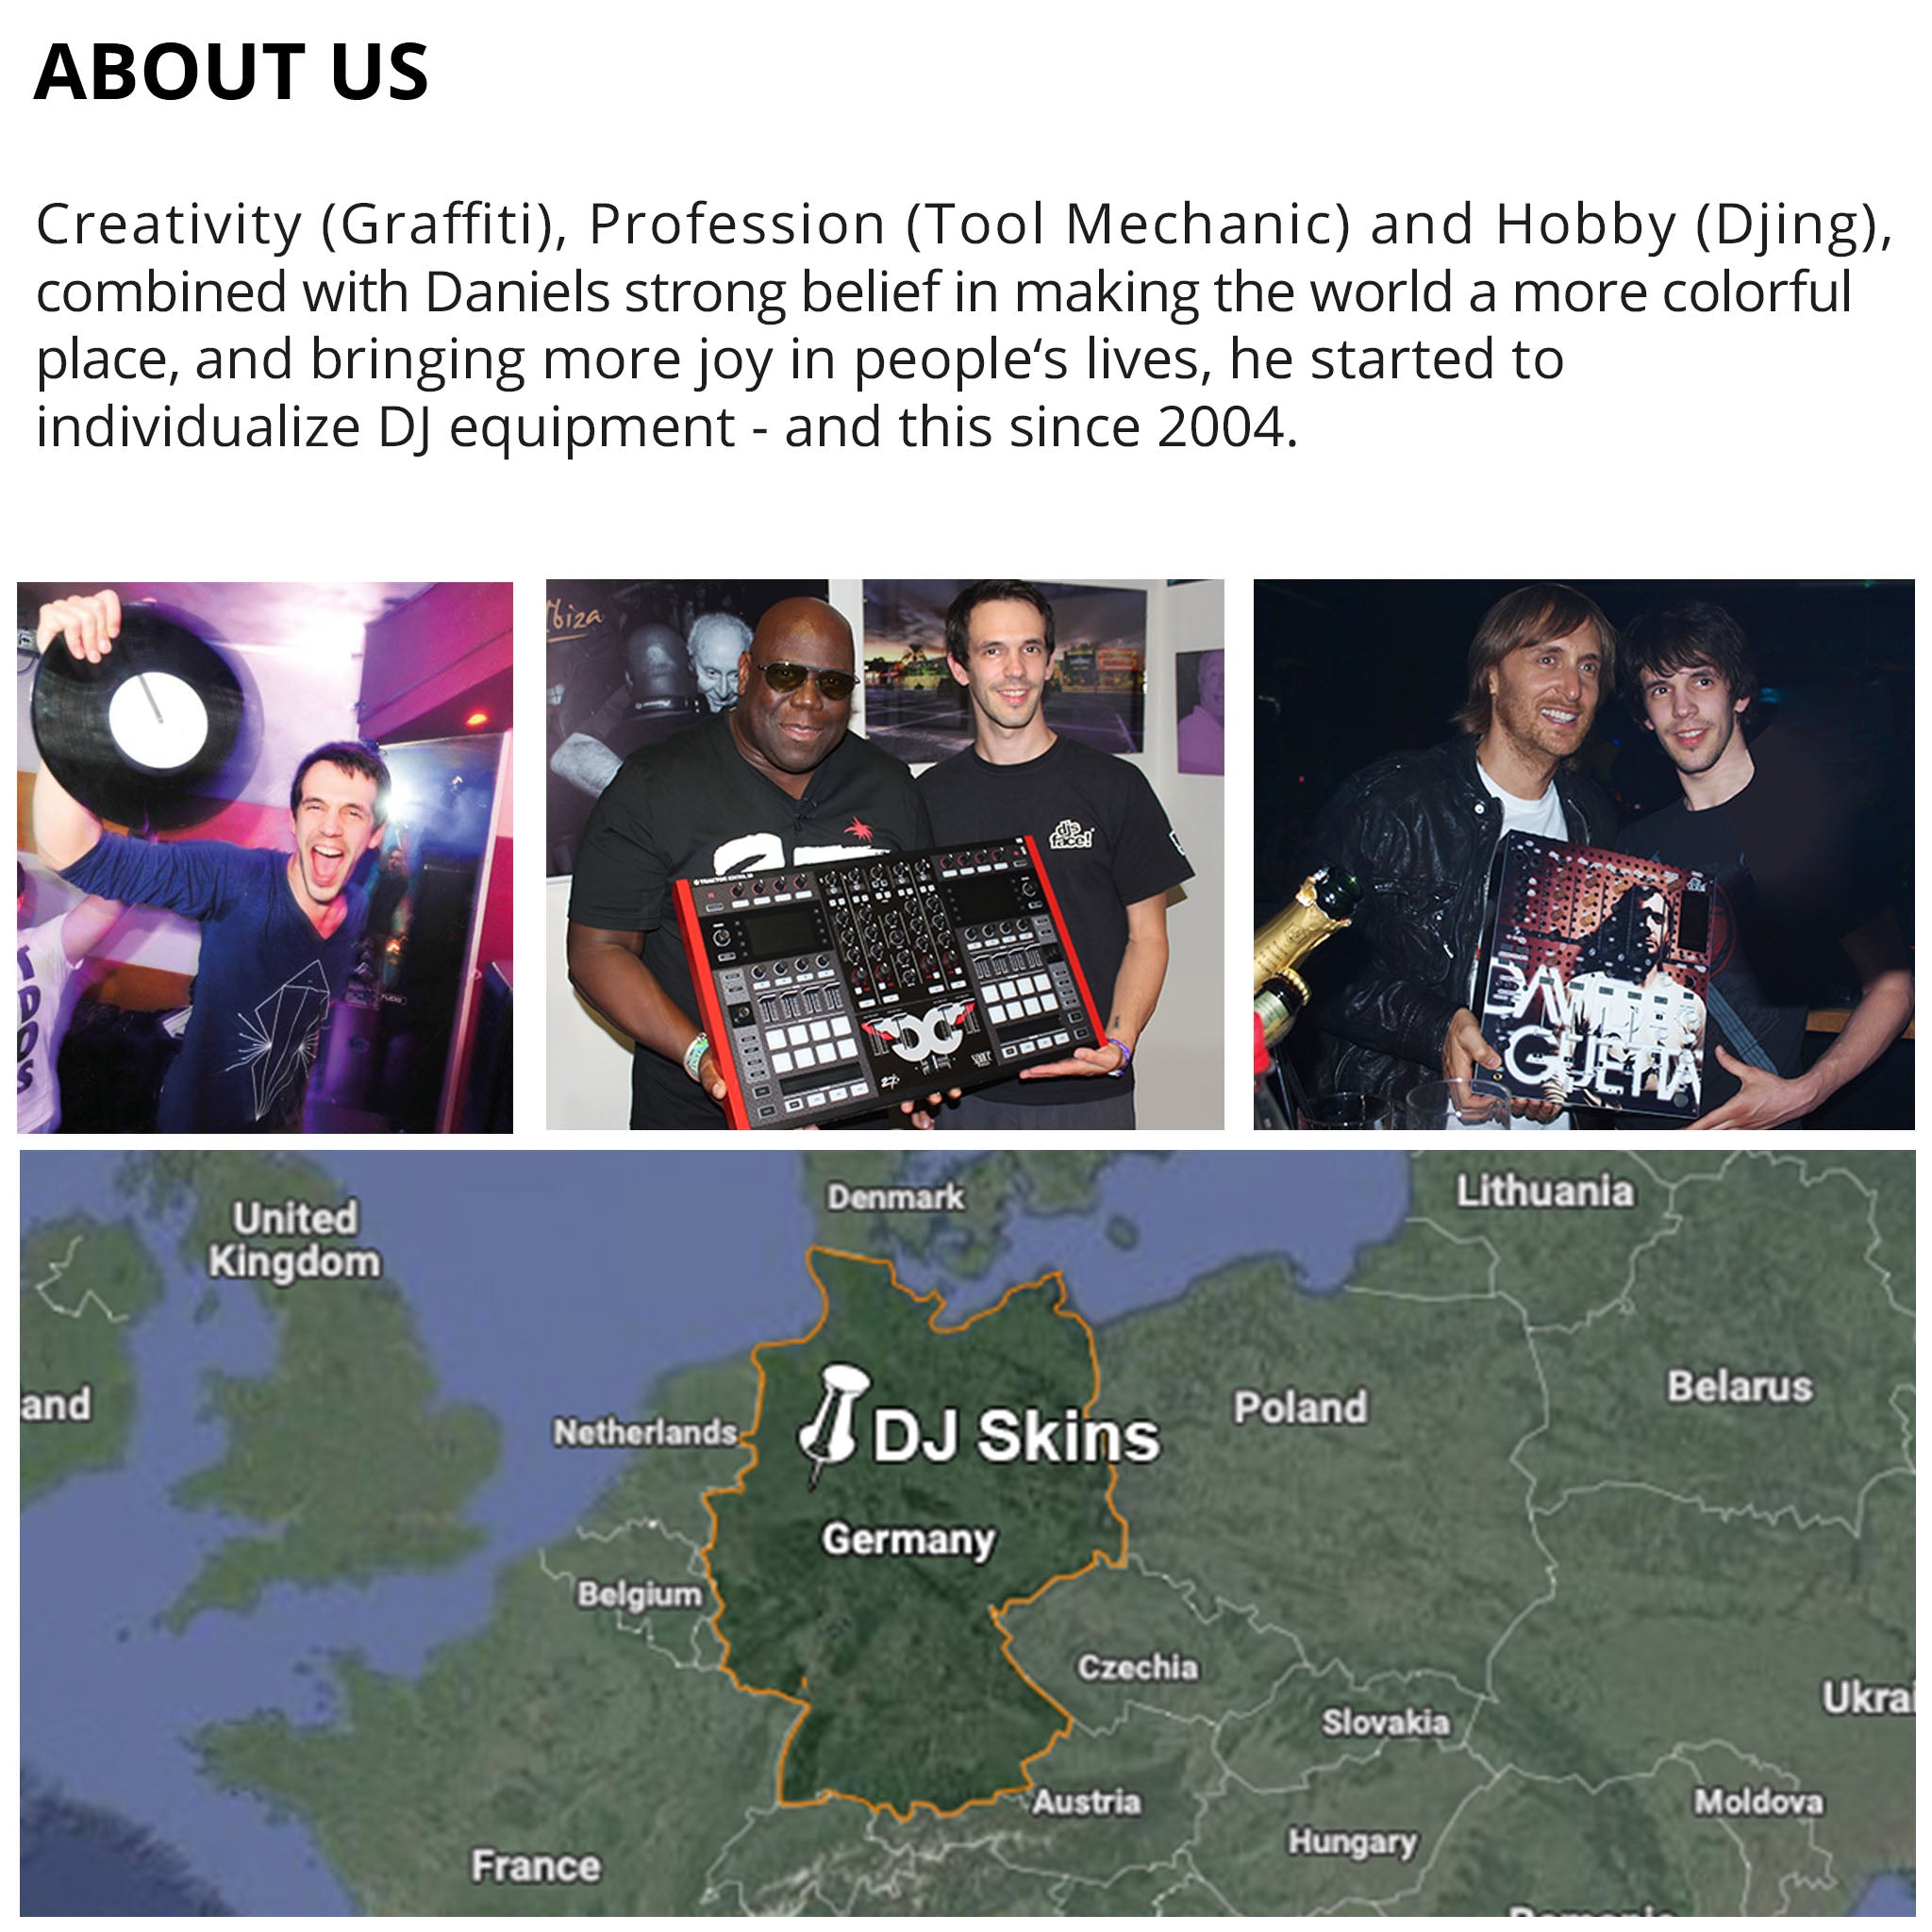 Pioneer DJ DJM S9 Skin Constructor